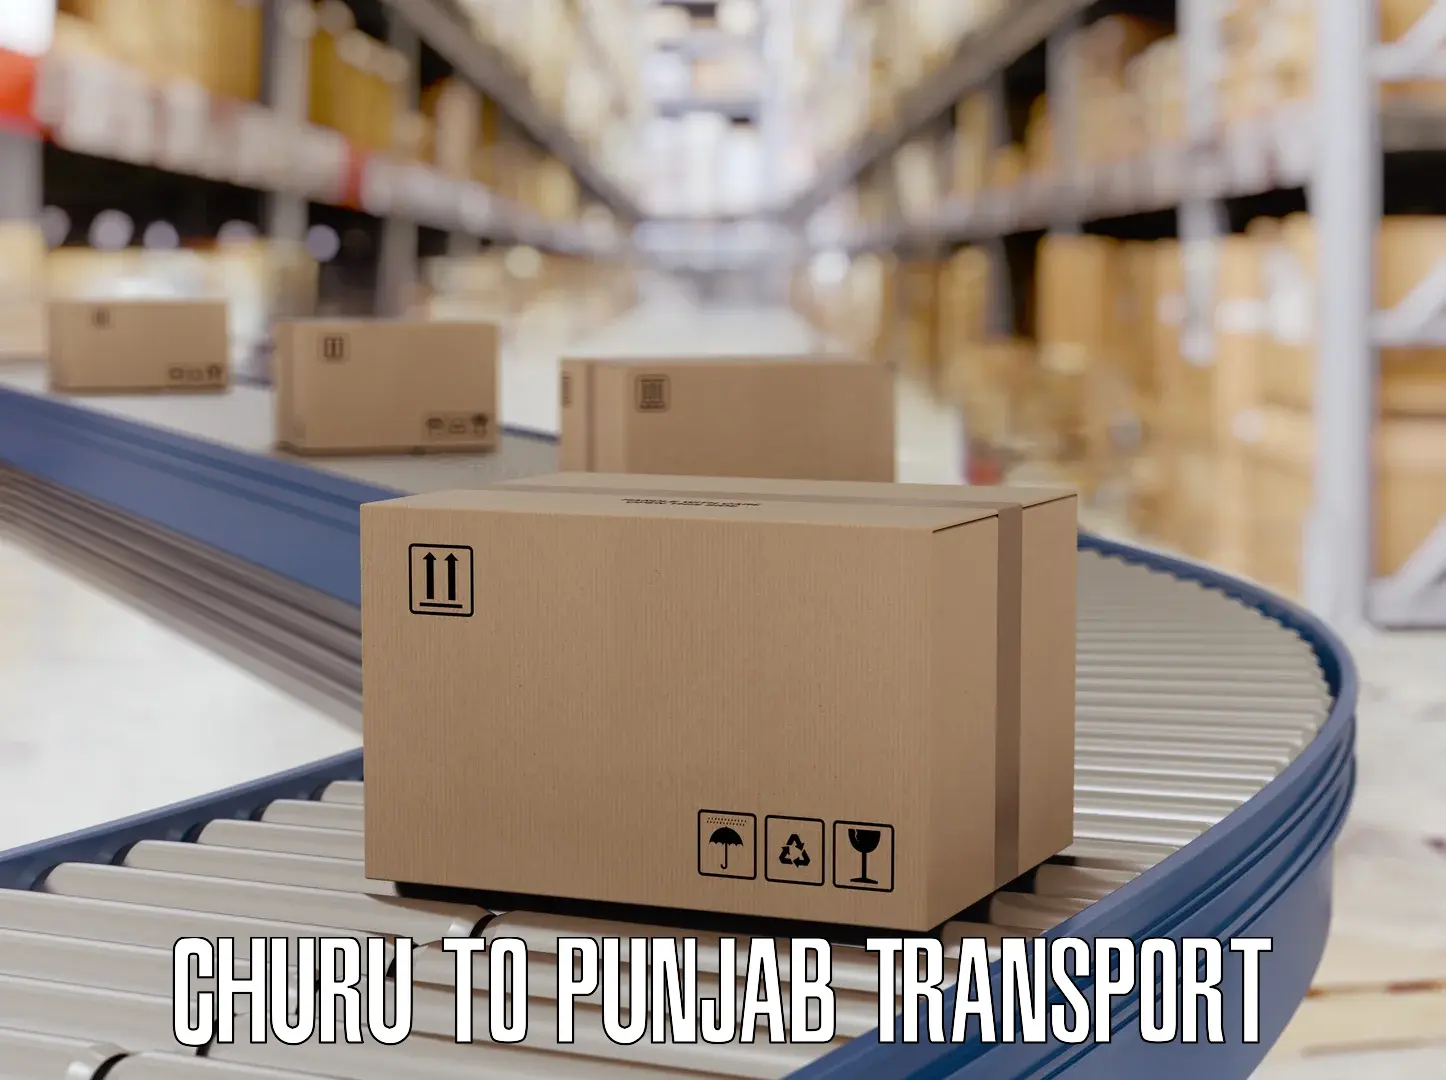 Transport in sharing Churu to Punjab